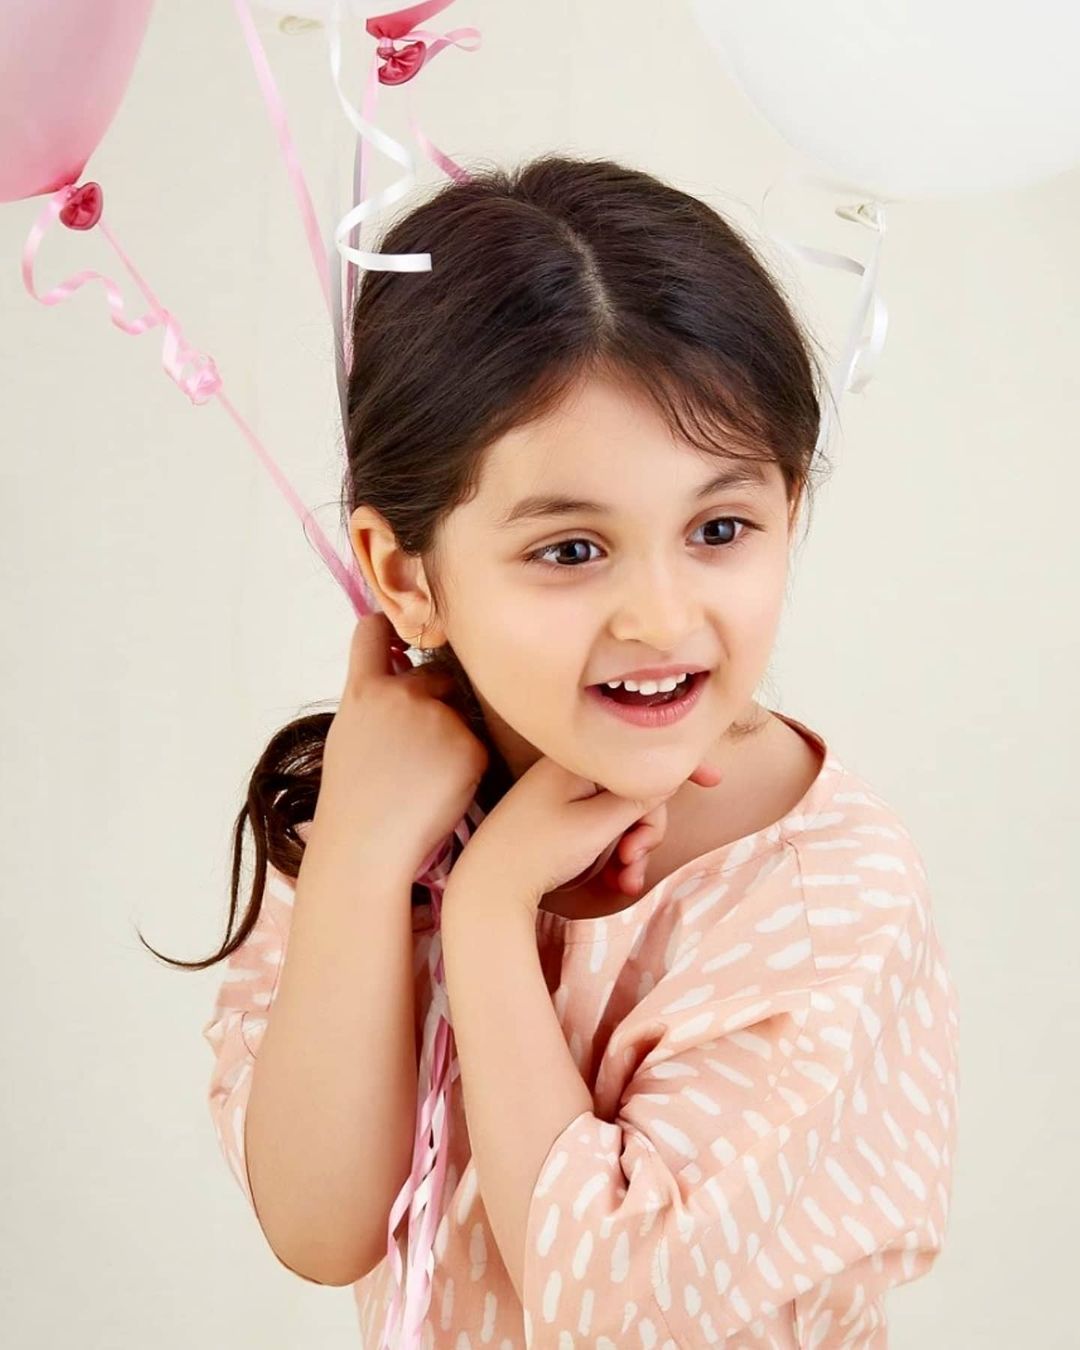 Myra & Kiara Khanna (Child Star) Age, Instagram Star, Biography